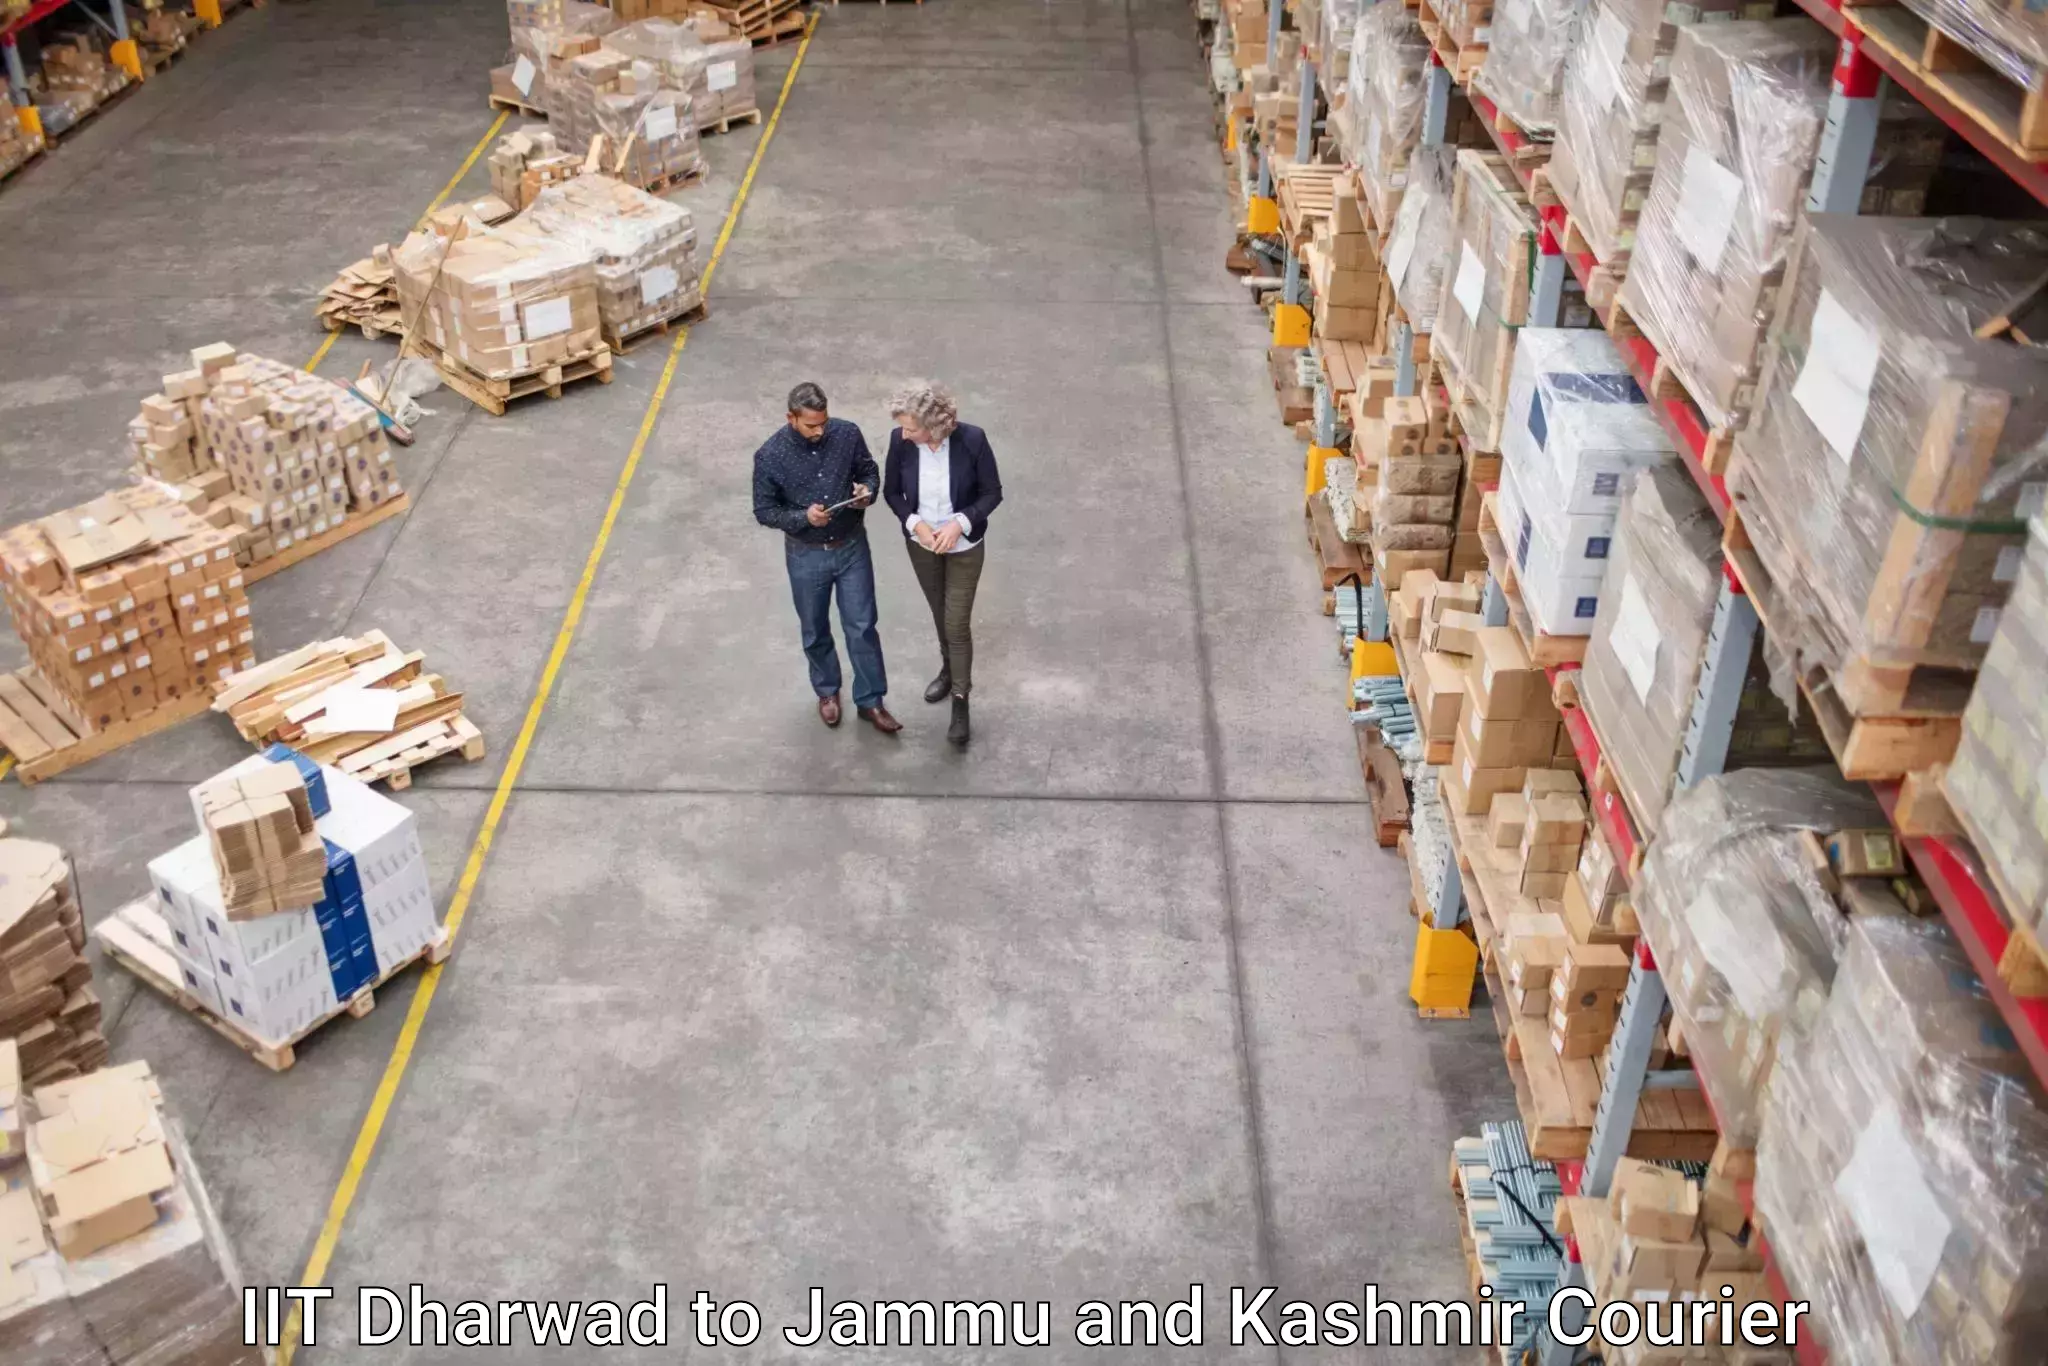 Global courier networks IIT Dharwad to Srinagar Kashmir